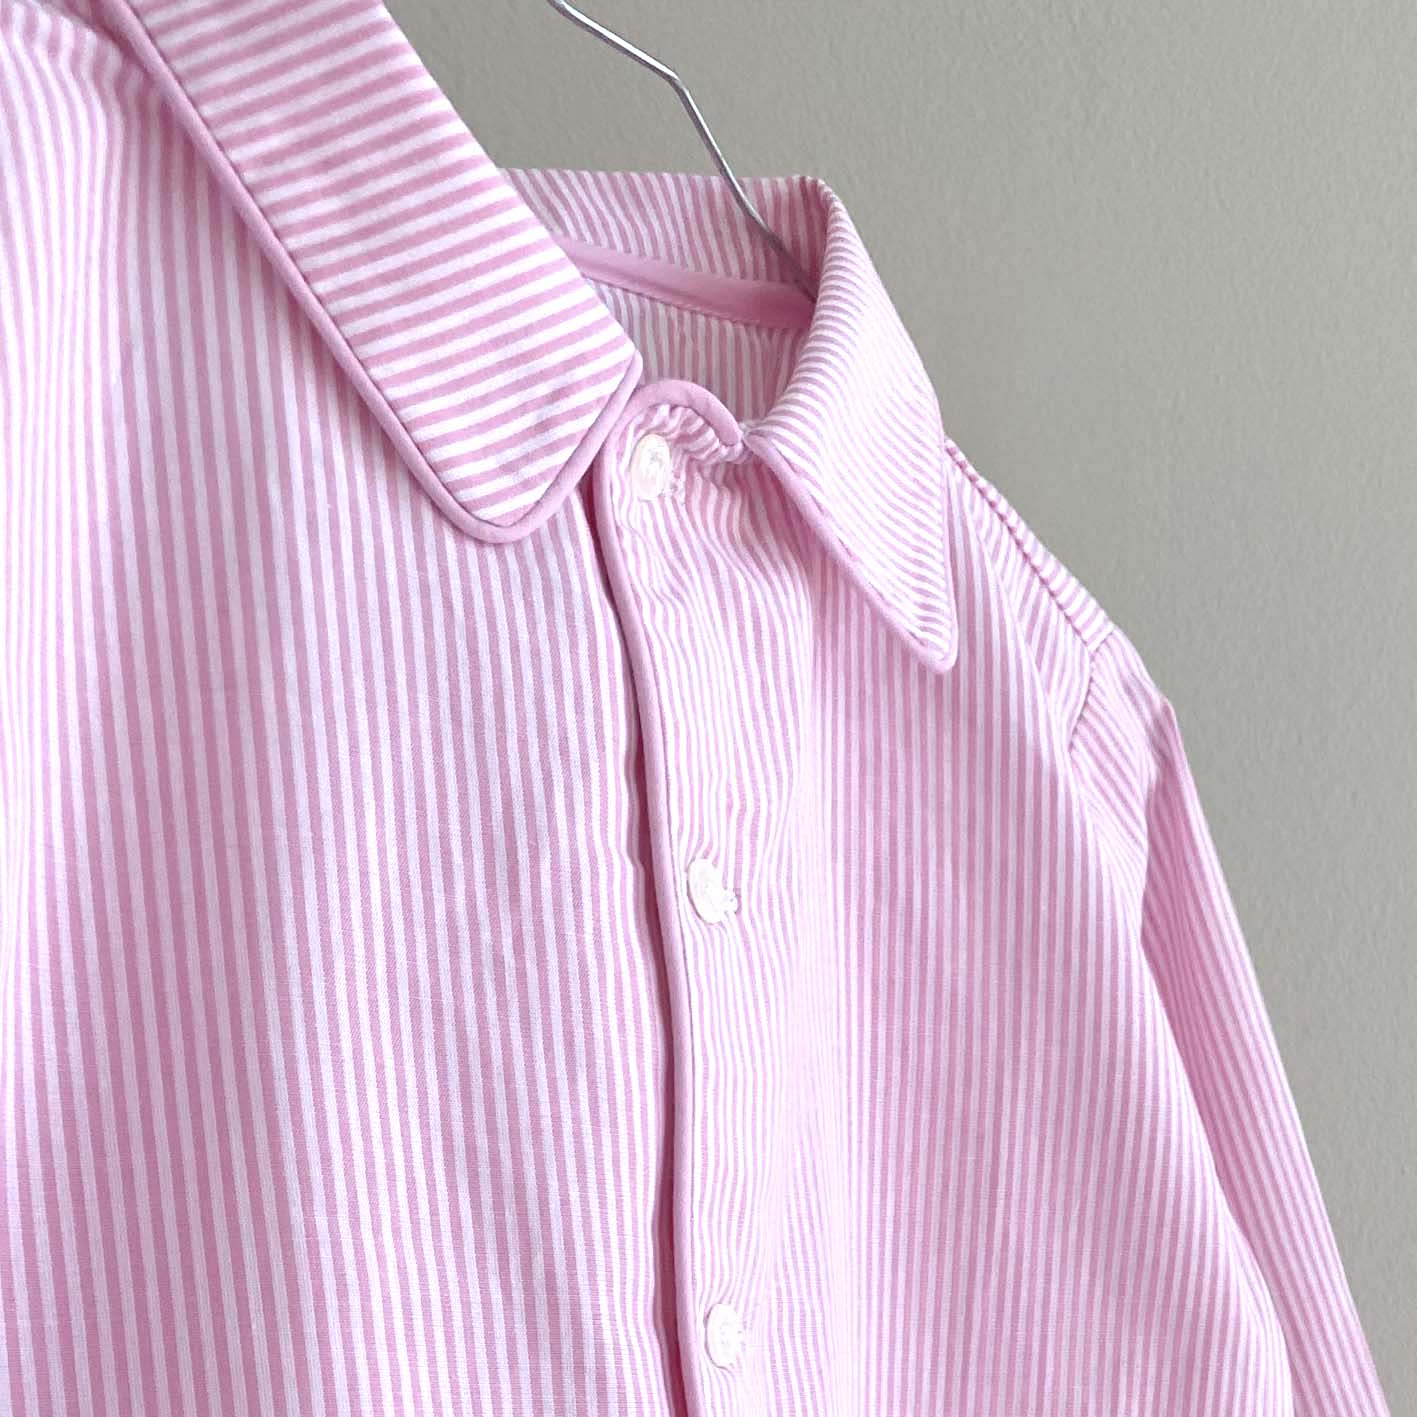 Kids shirt pink stripes